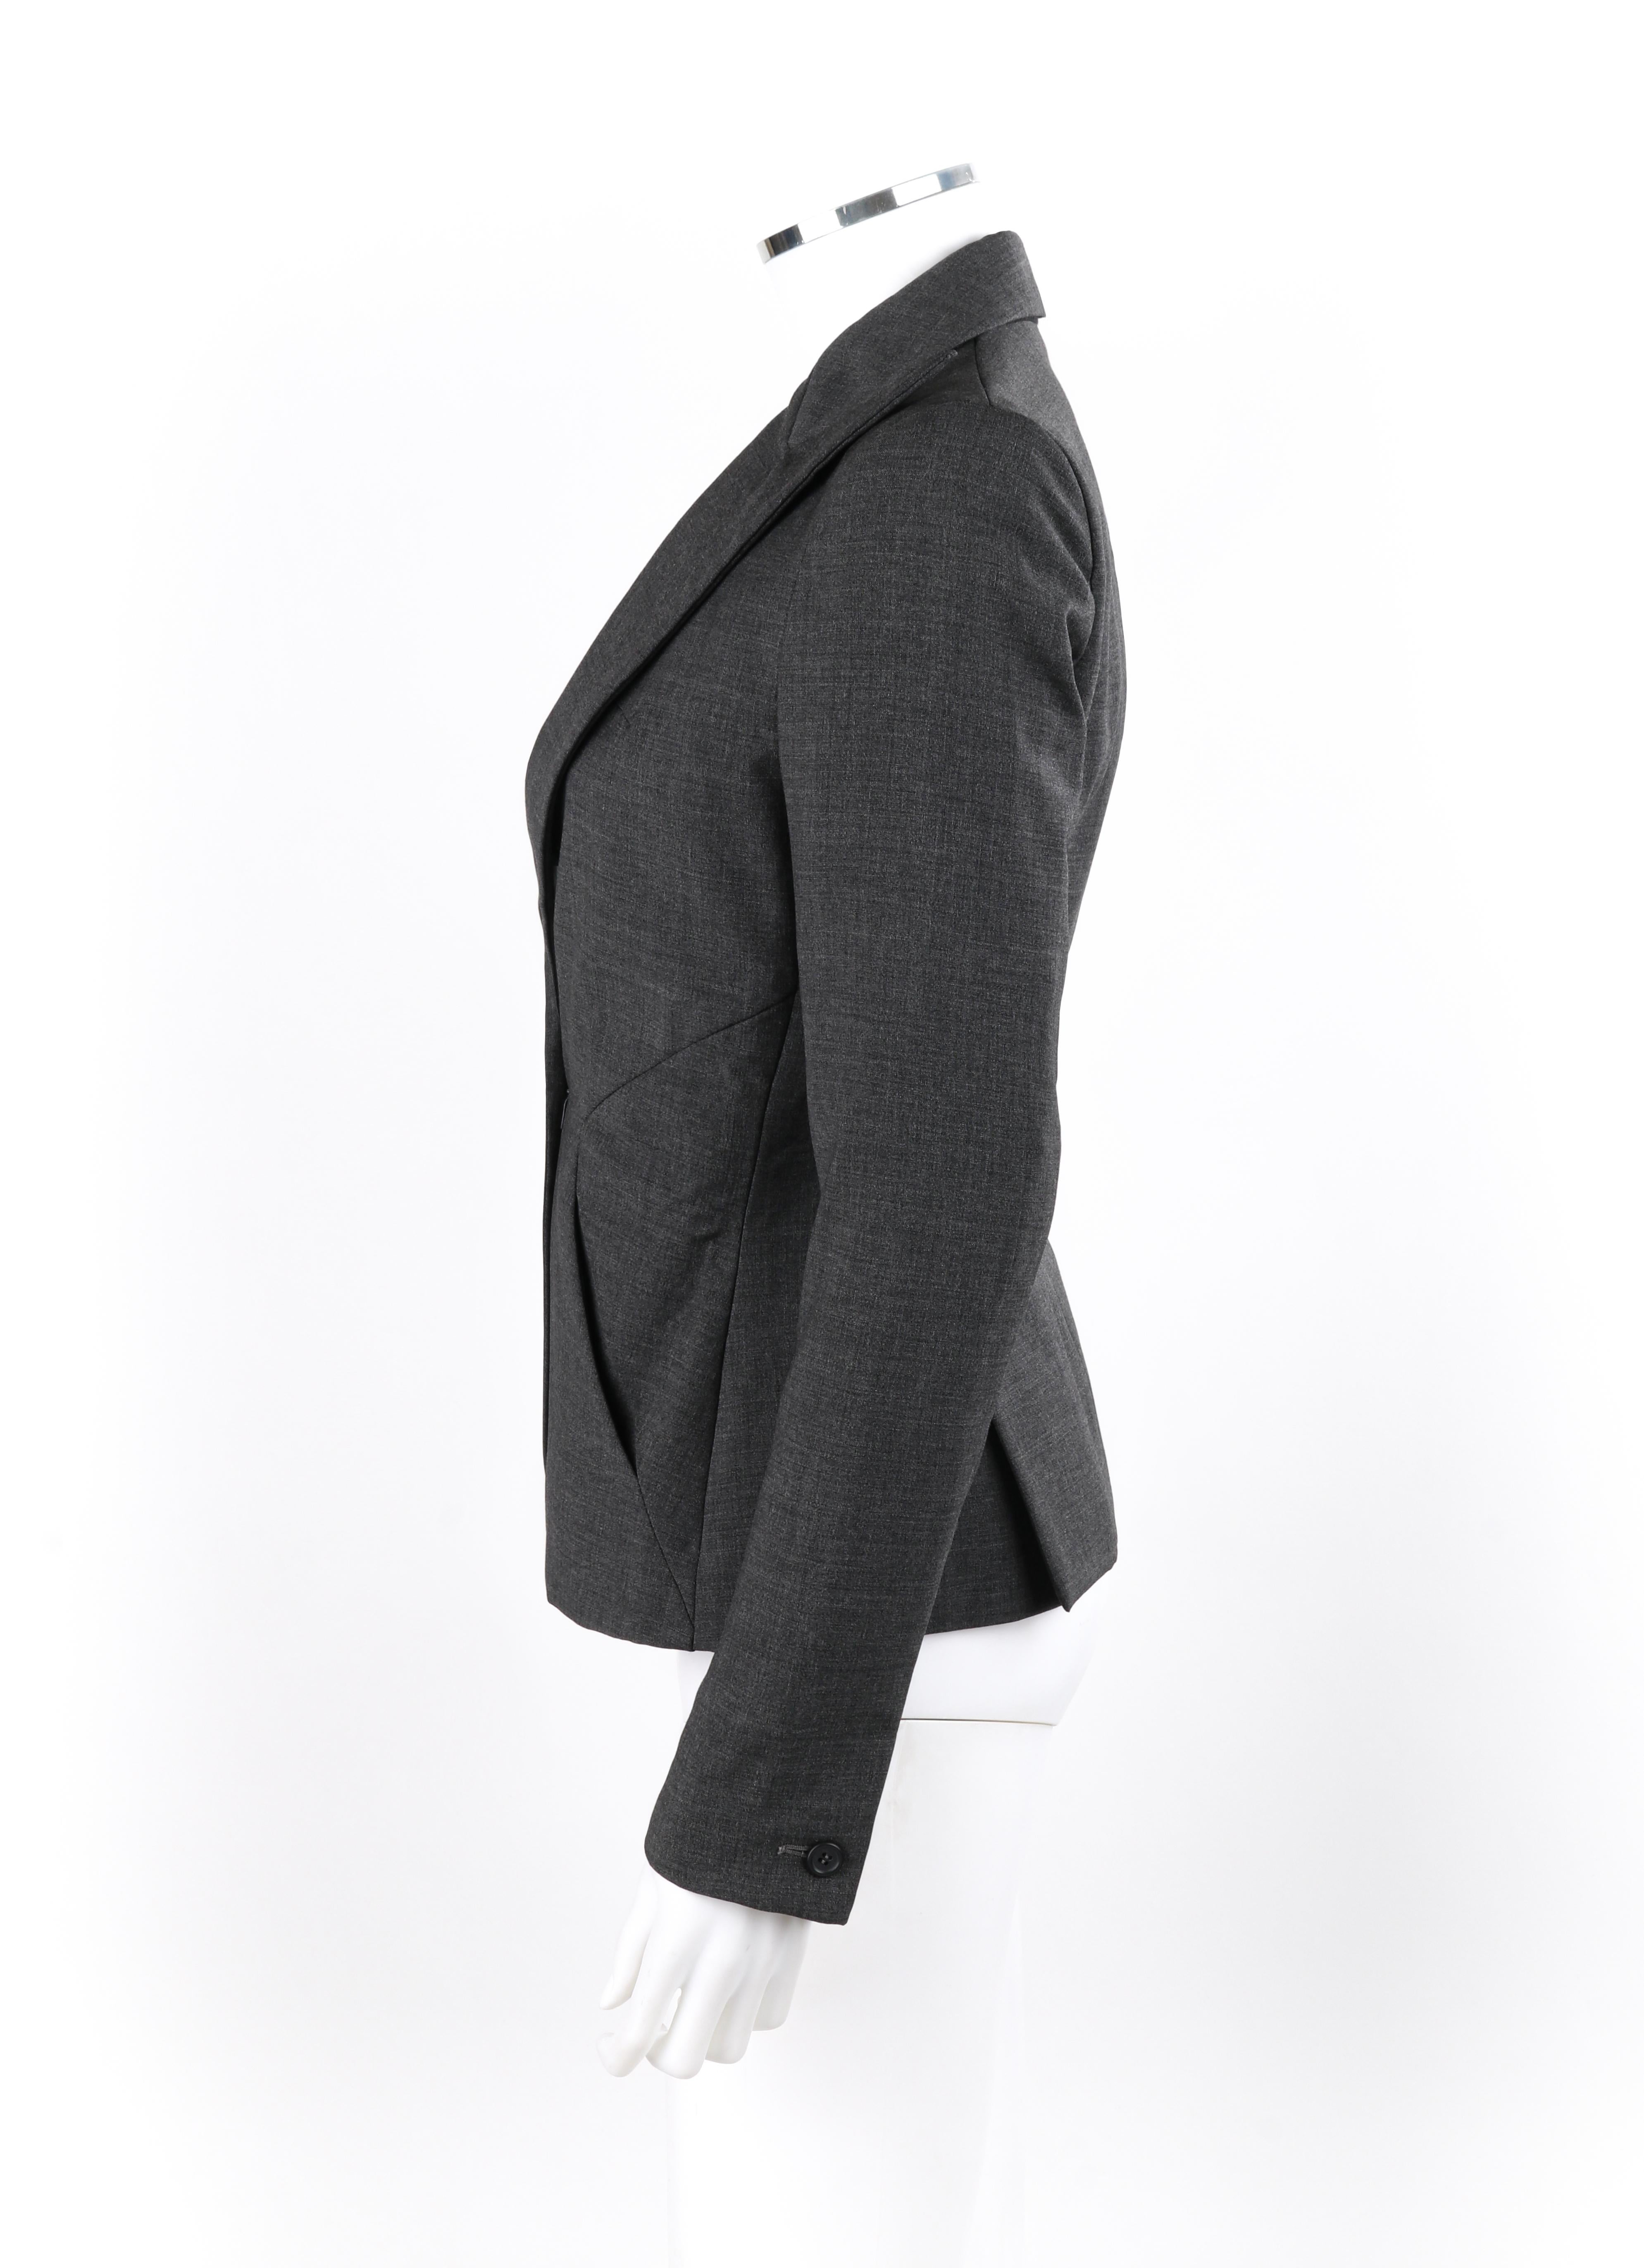 Women's ALEXANDER McQUEEN S/S 1996 “The Hunger” Gray Tailored Long Sleeve Blazer Jacket For Sale